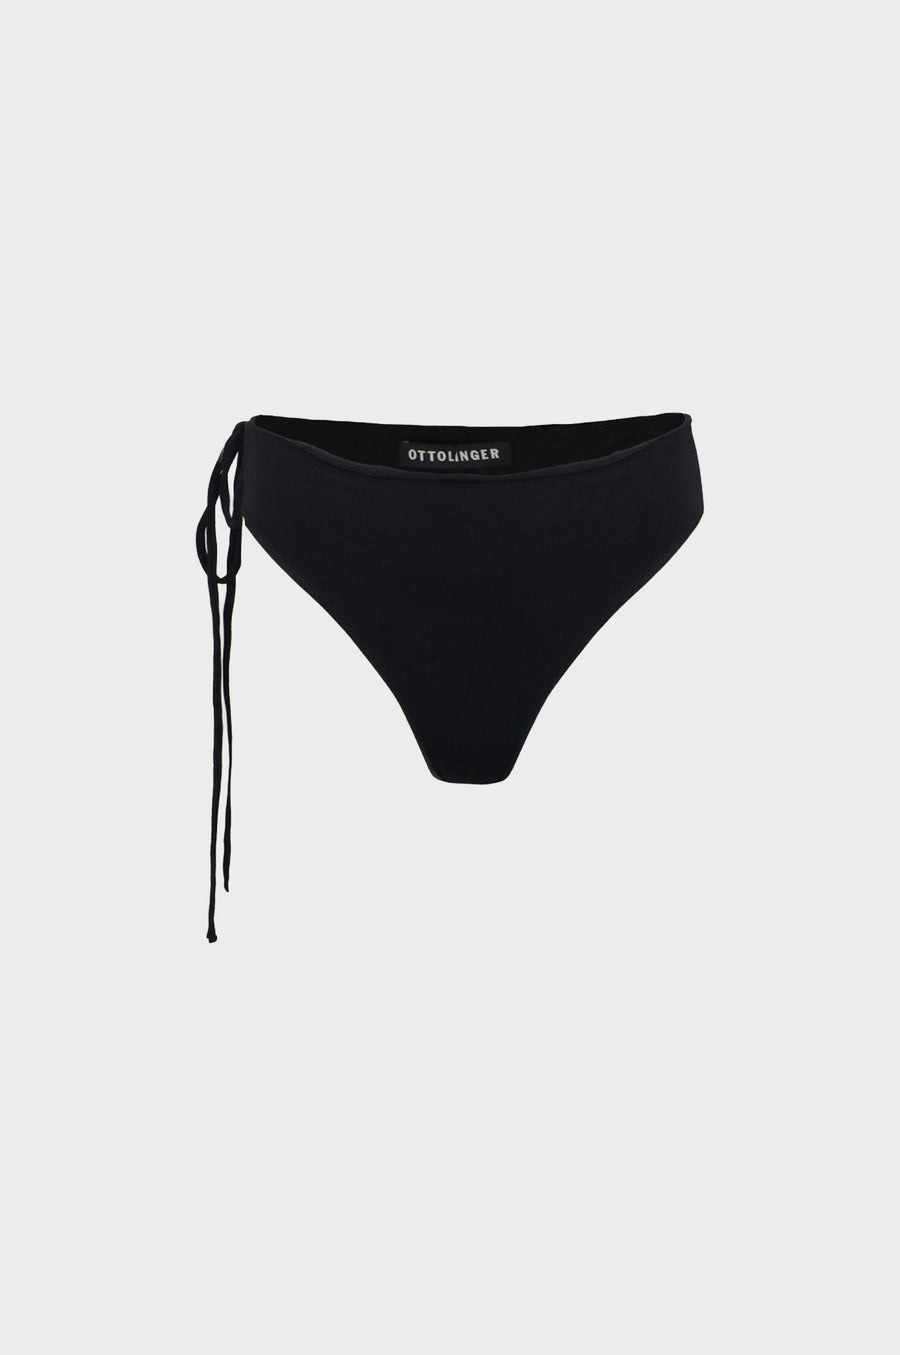 Ottolinger - Knit Wrap Bikini Bottom - Black